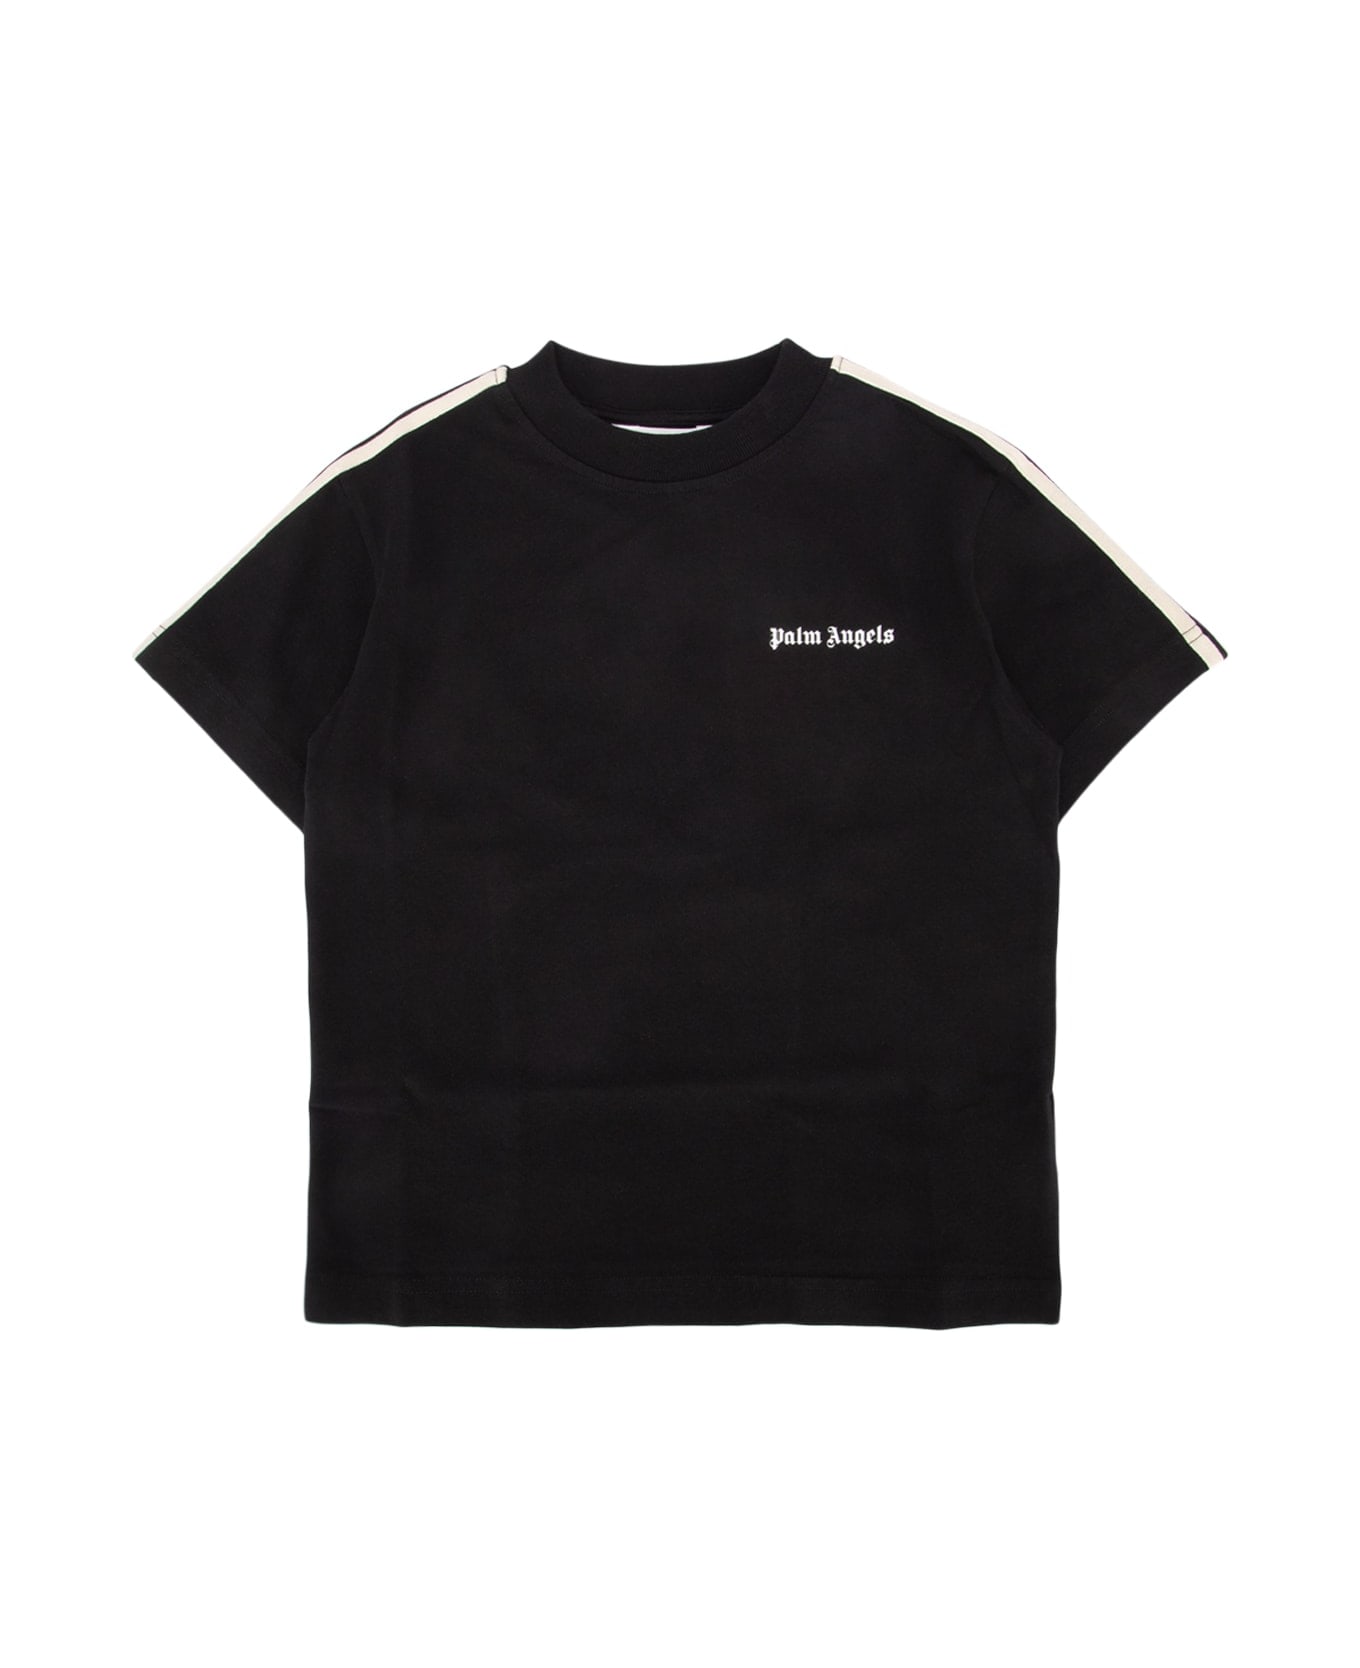 Palm Angels T-shirt - BLACKWHITE